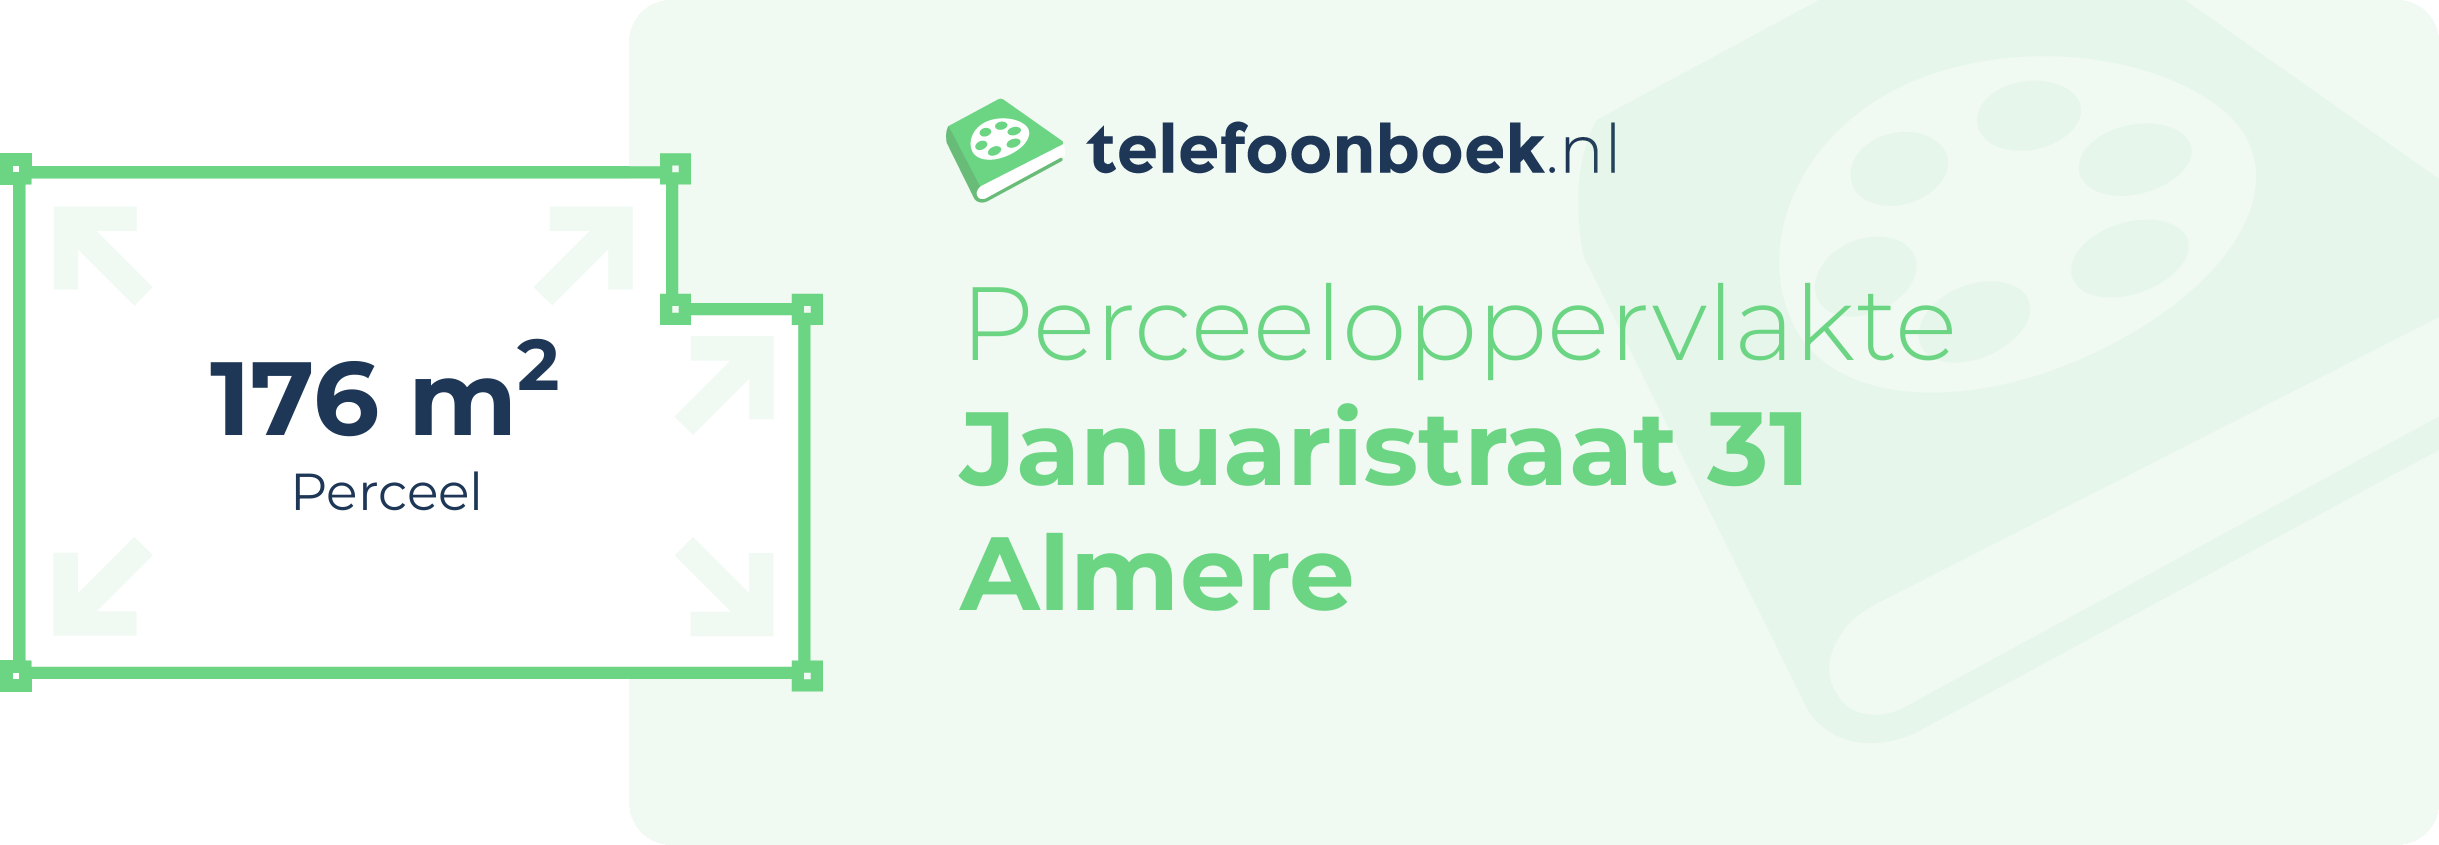 Perceeloppervlakte Januaristraat 31 Almere